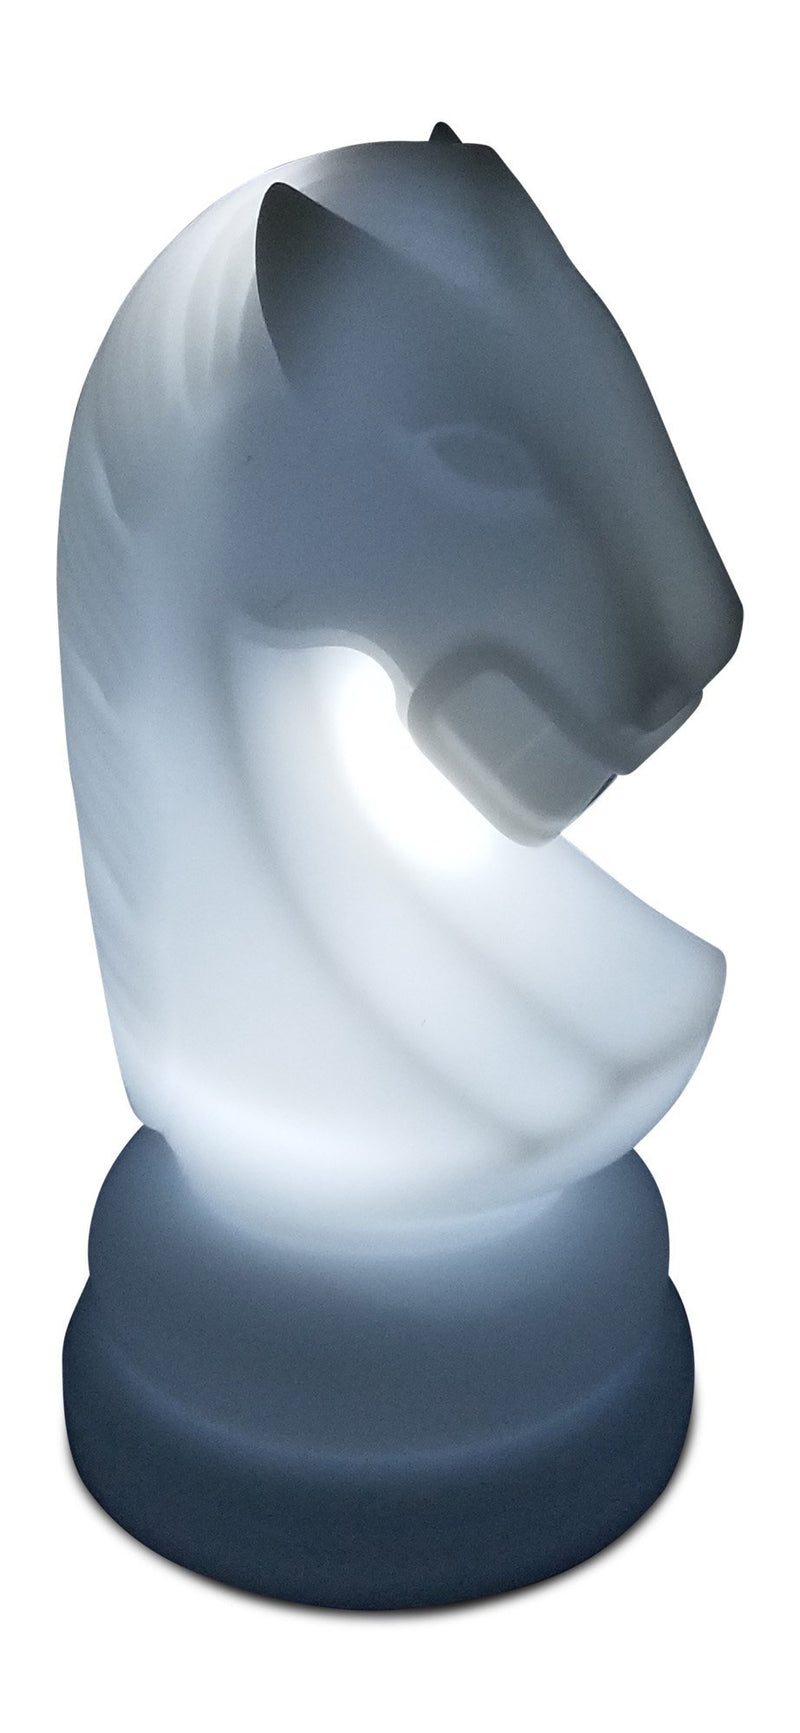 MegaChess 23 Inch Premium Plastic Knight Light-Up Giant Chess Piece - White | Default Title | GiantChessUSA